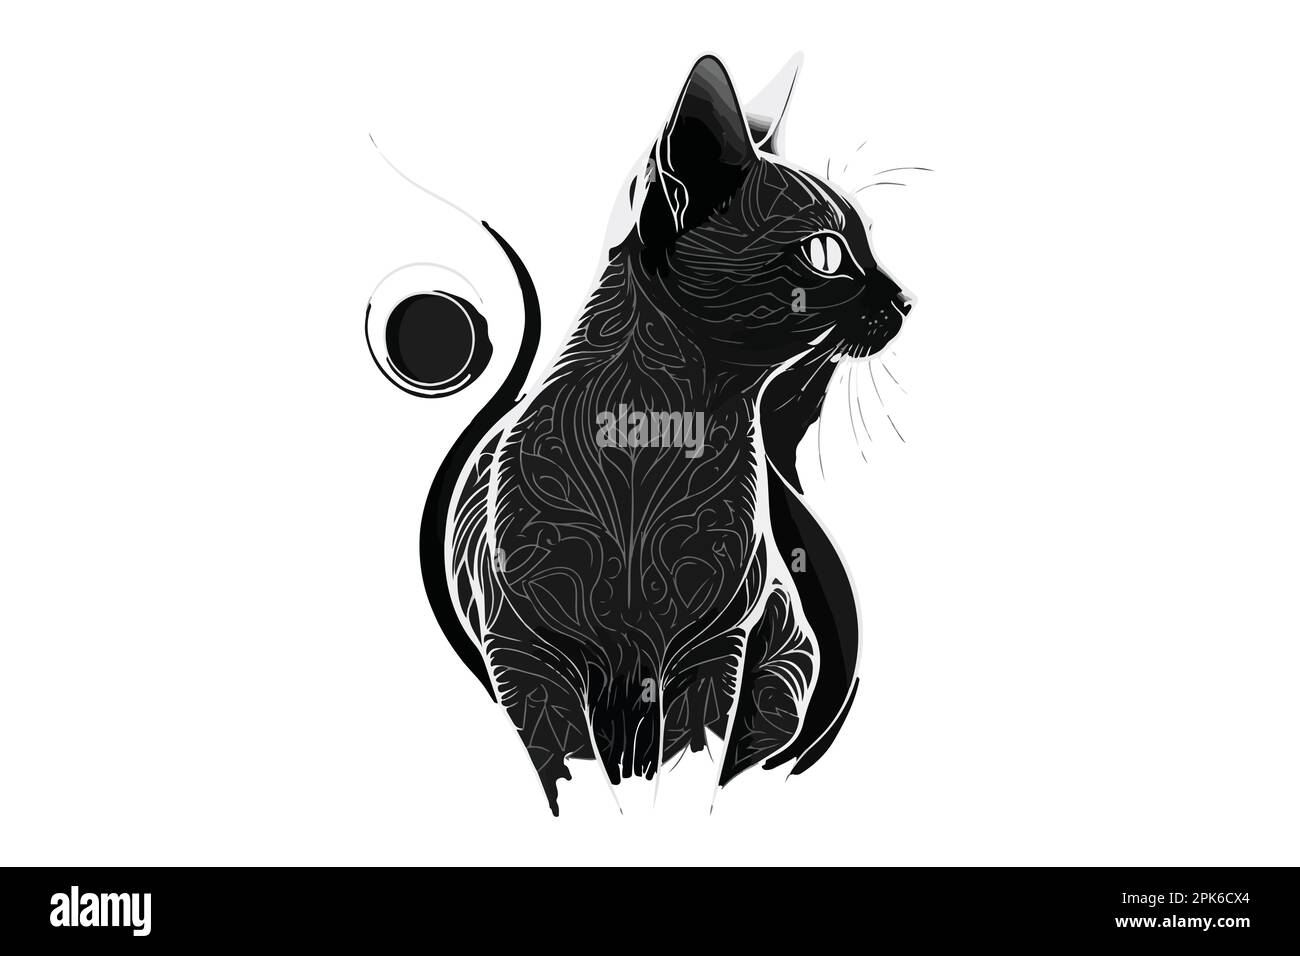 Cat Butt Temporary Tattoo Sticker - OhMyTat